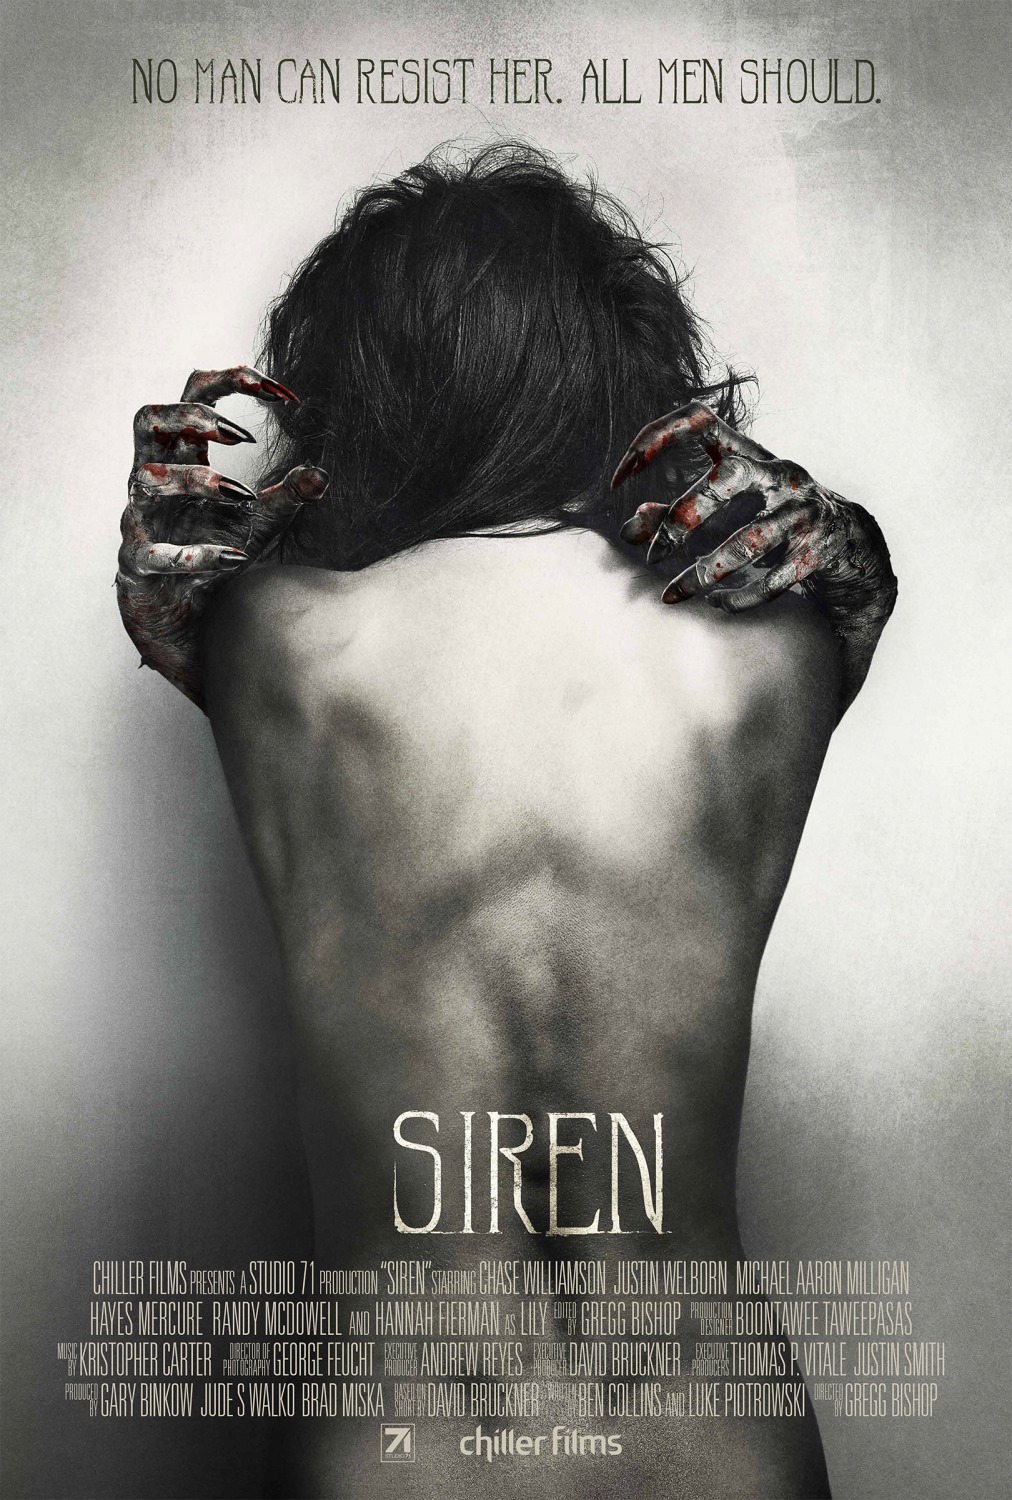 Laura Brand: Siren of San Quentin